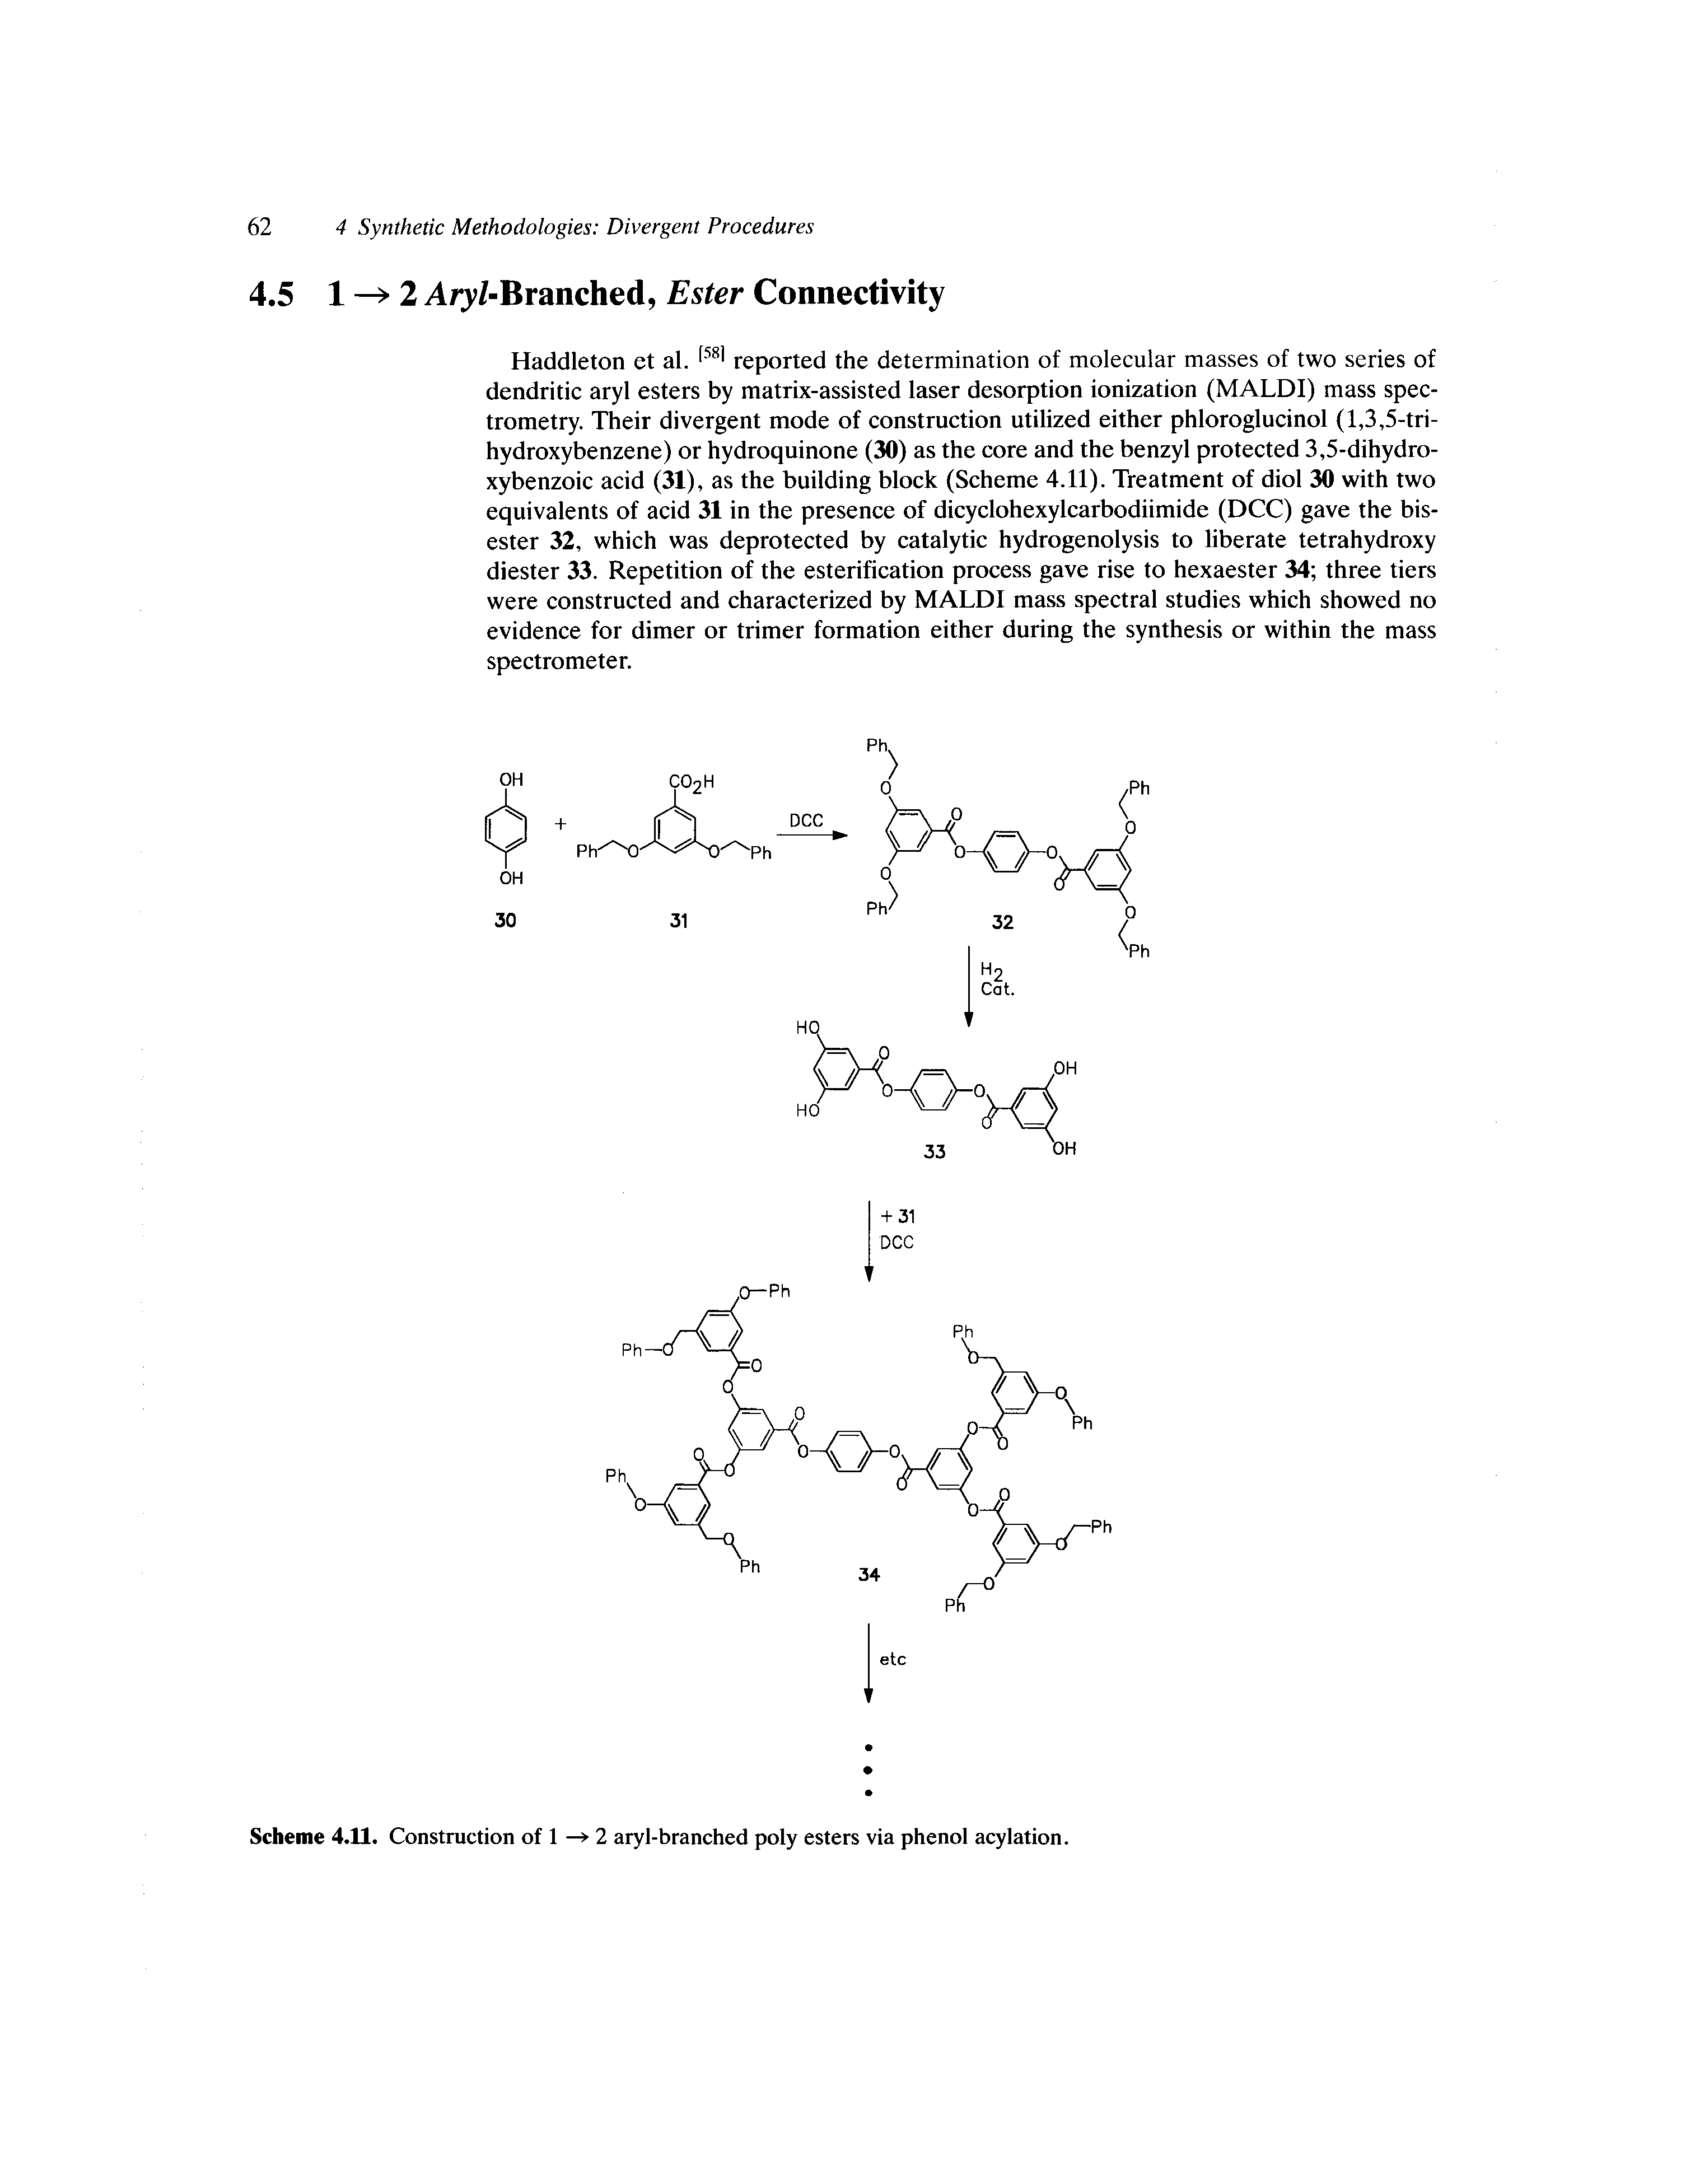 Scheme 4.11. Construction of 1 — 2 aryl-branched poly esters via phenol acylation.